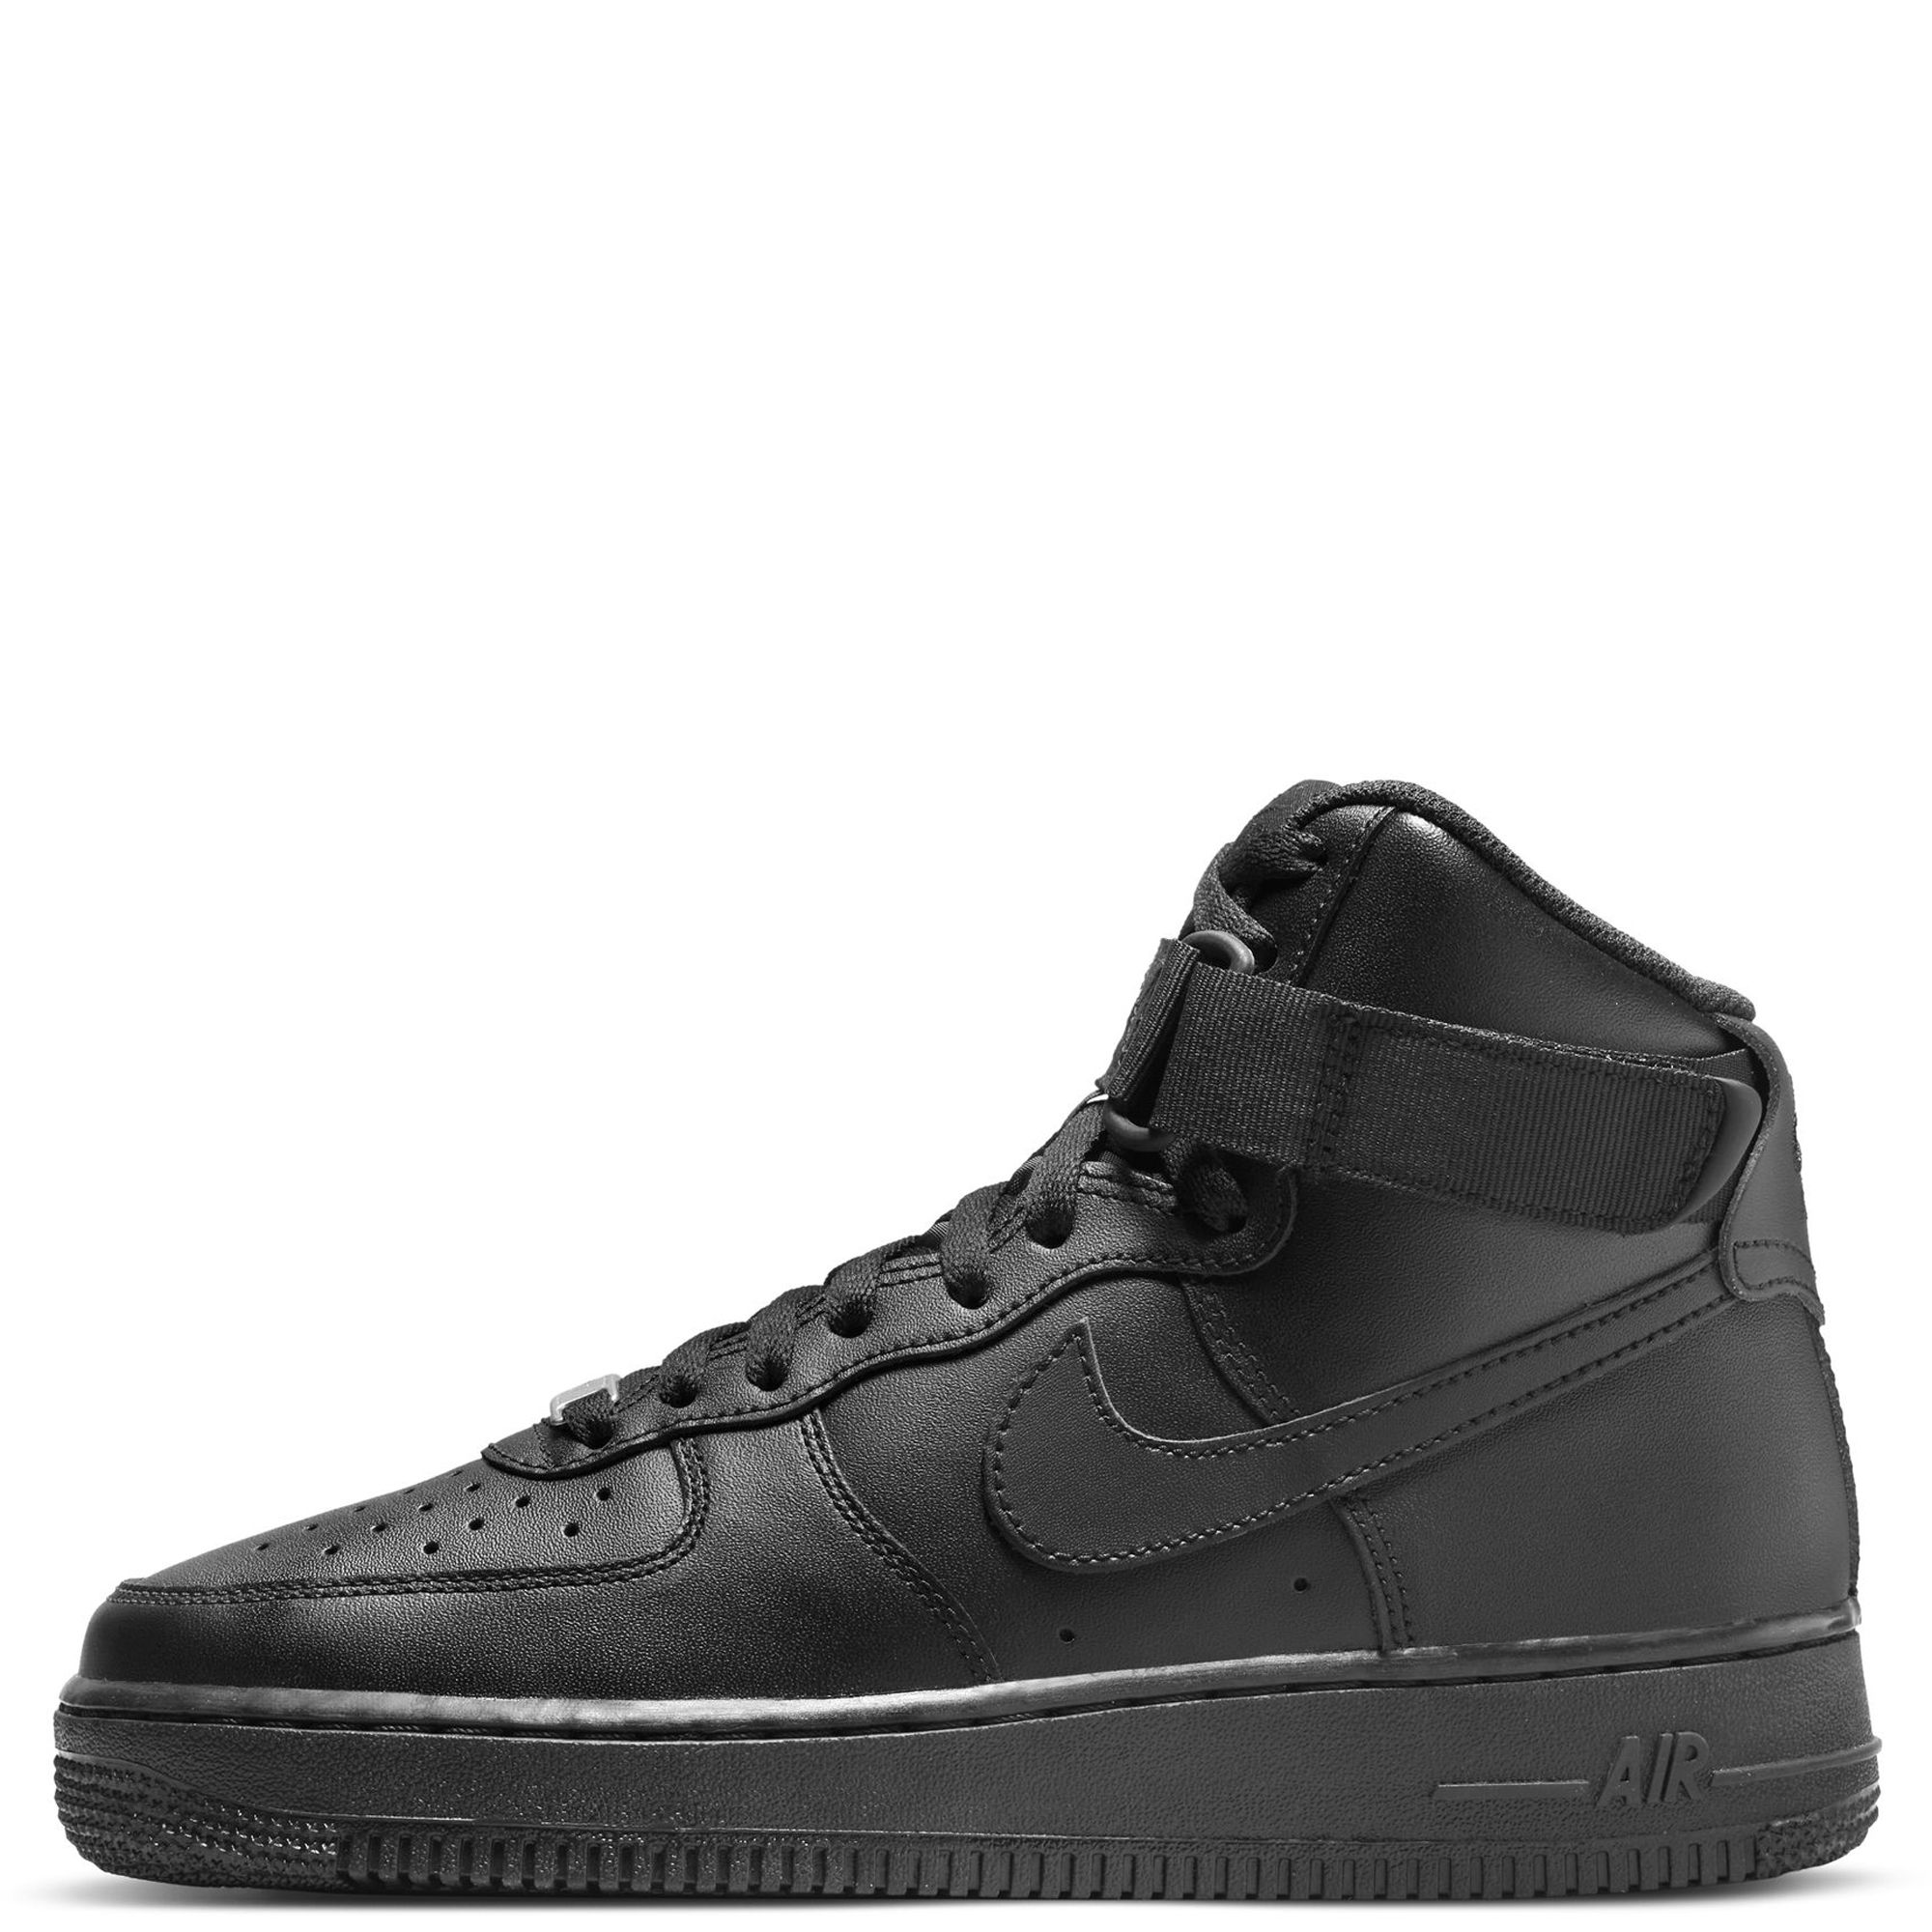 Nike Air Force 1 High Black/Black/Black Women's Shoes, Size: 6.5